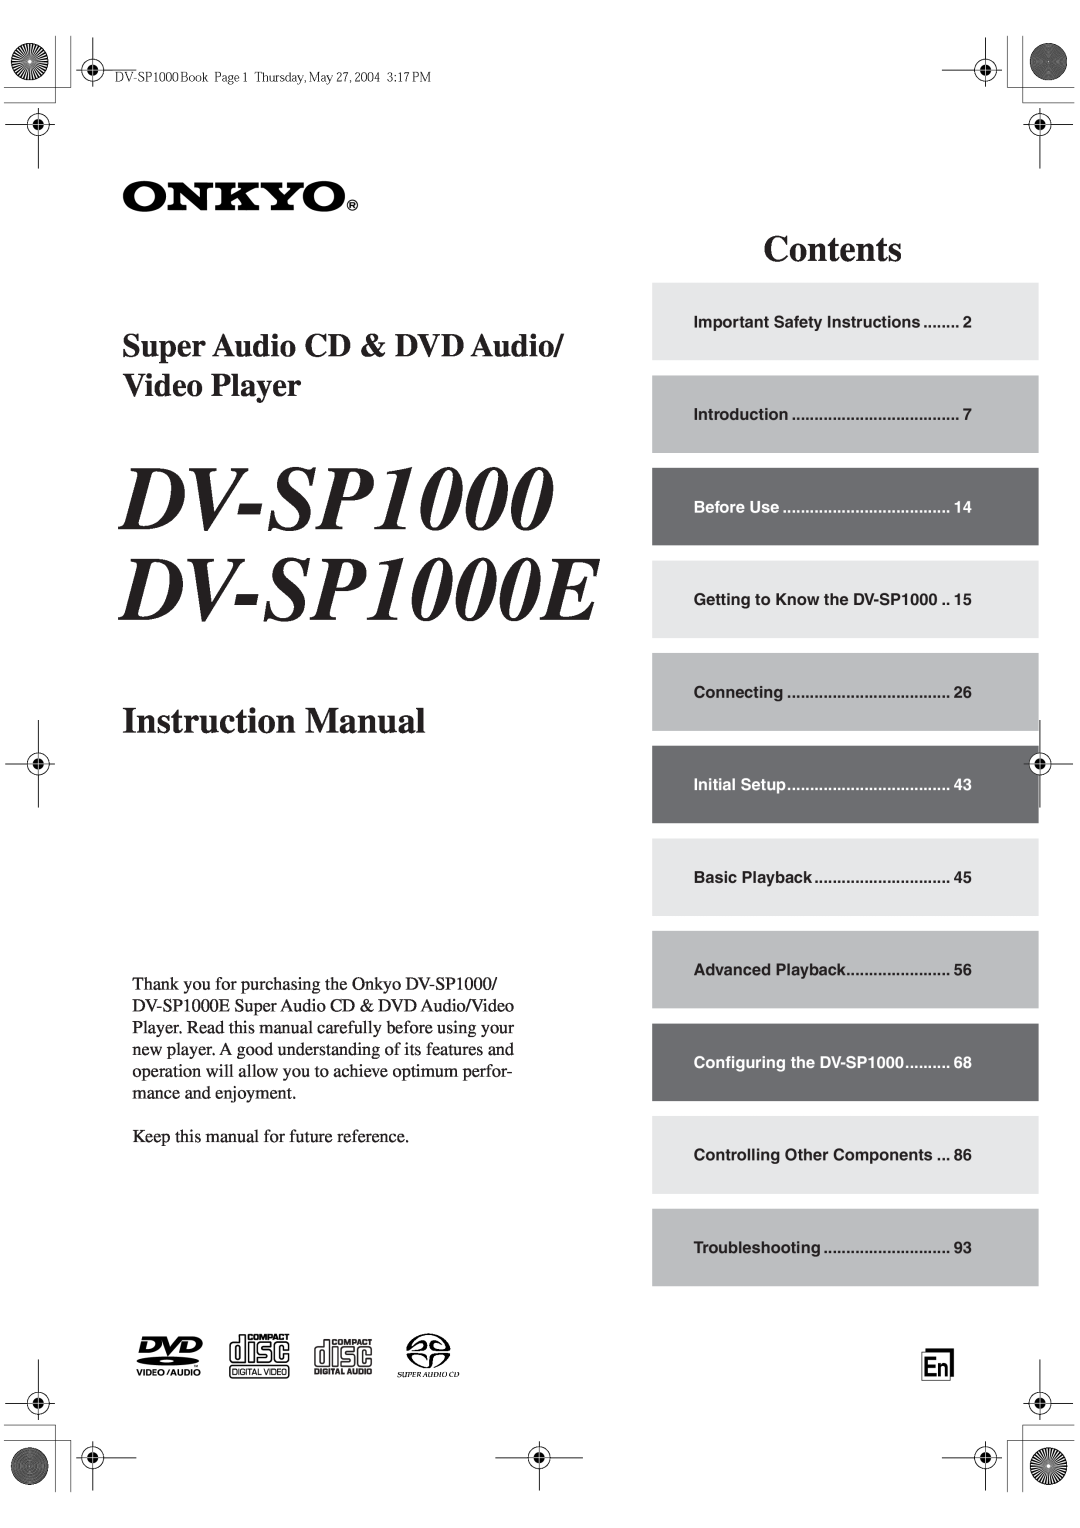 Onkyo instruction manual DV-SP1000 DV-SP1000E, Contents, Super Audio CD & DVD Audio/ Video Player 